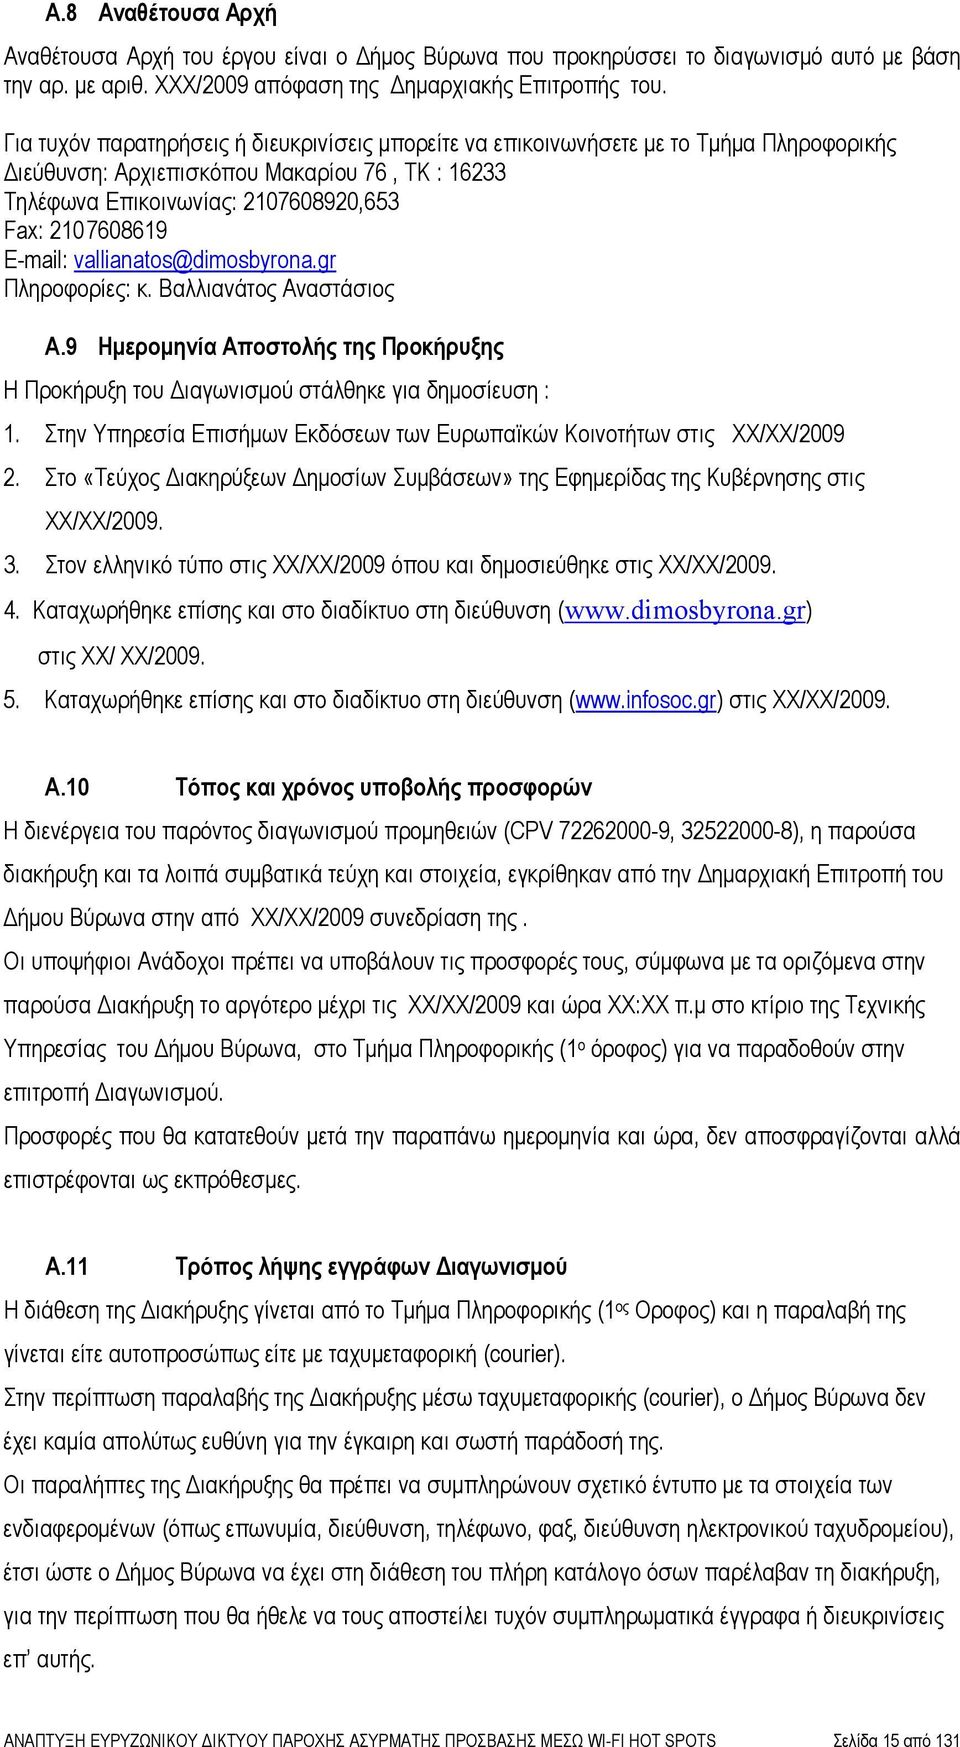 E-mail: vallianatos@dimosbyrona.gr Πληροφορίες: κ. Βαλλιανάτος Αναστάσιος A.9 Ηµεροµηνία Αποστολής της Προκήρυξης Η Προκήρυξη του ιαγωνισµού στάλθηκε για δηµοσίευση : 1.